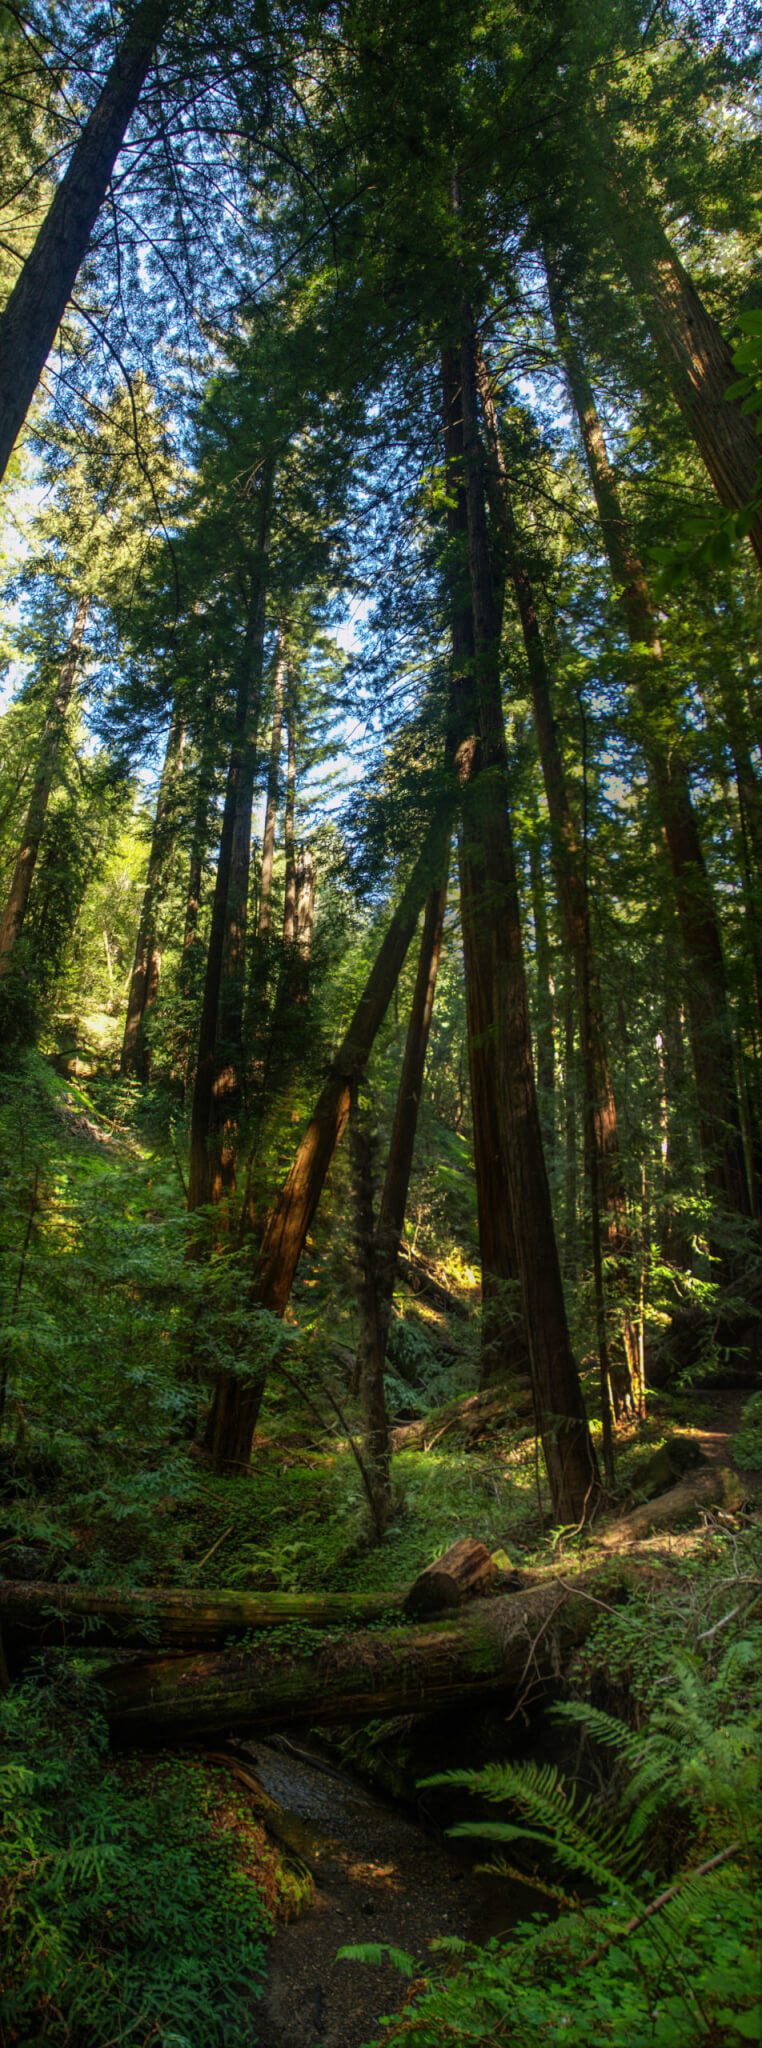 Portola Redwoods Peters Creek Grove by Wayne Hsieh